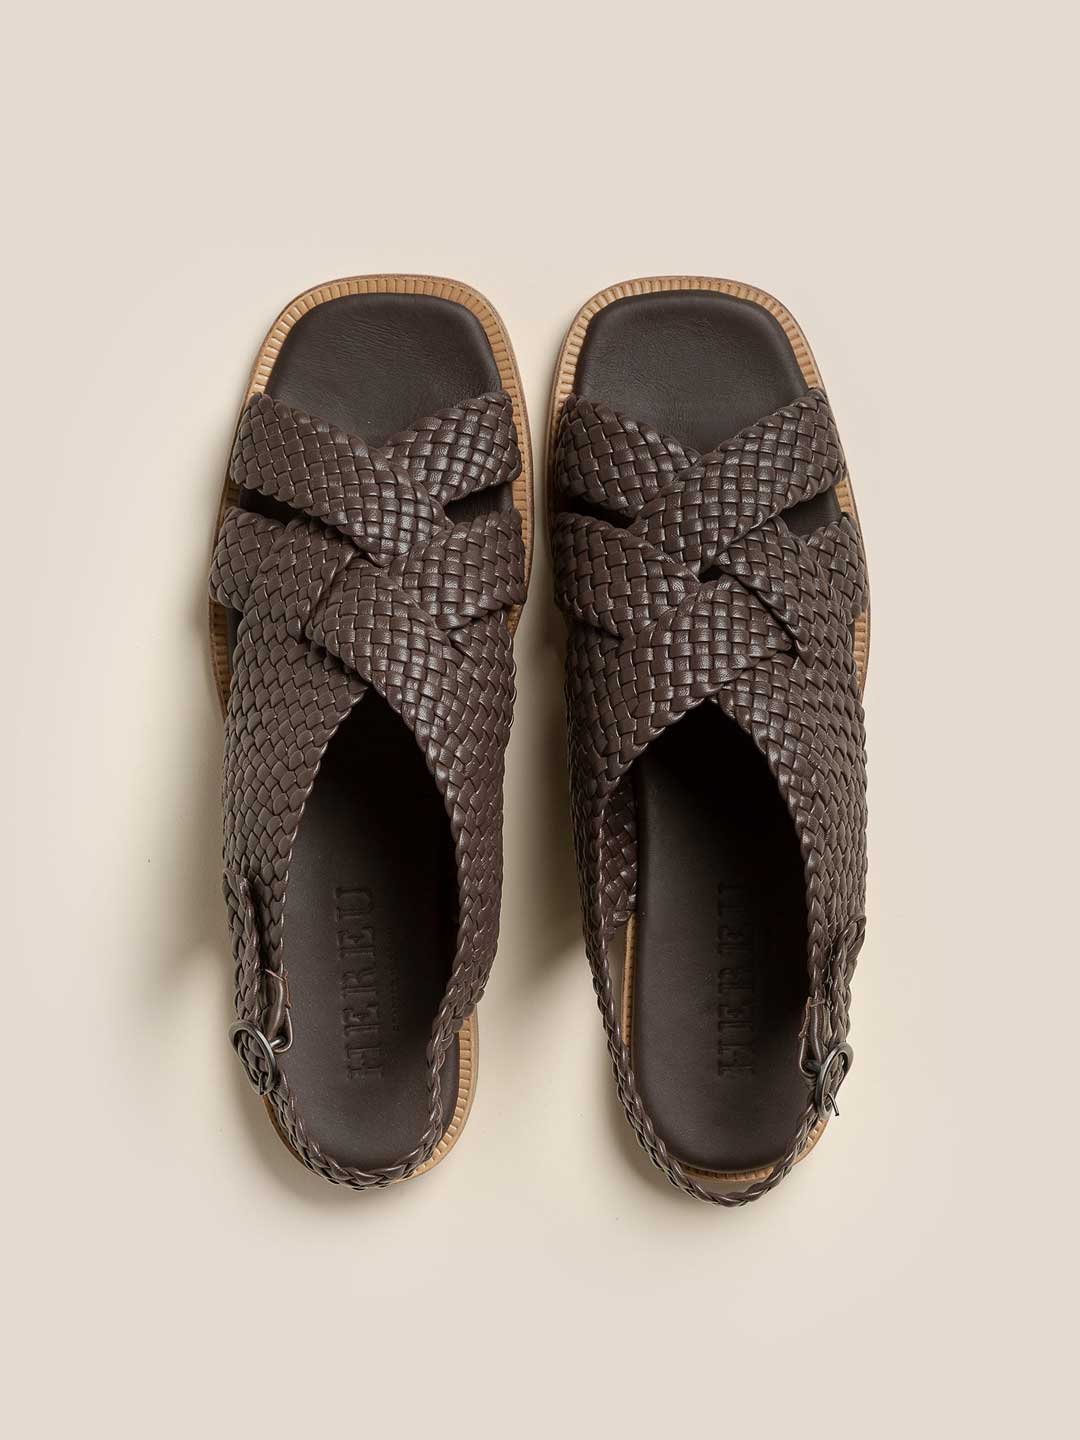 PENYO - Crossover Woven Sandal - Dark Brown